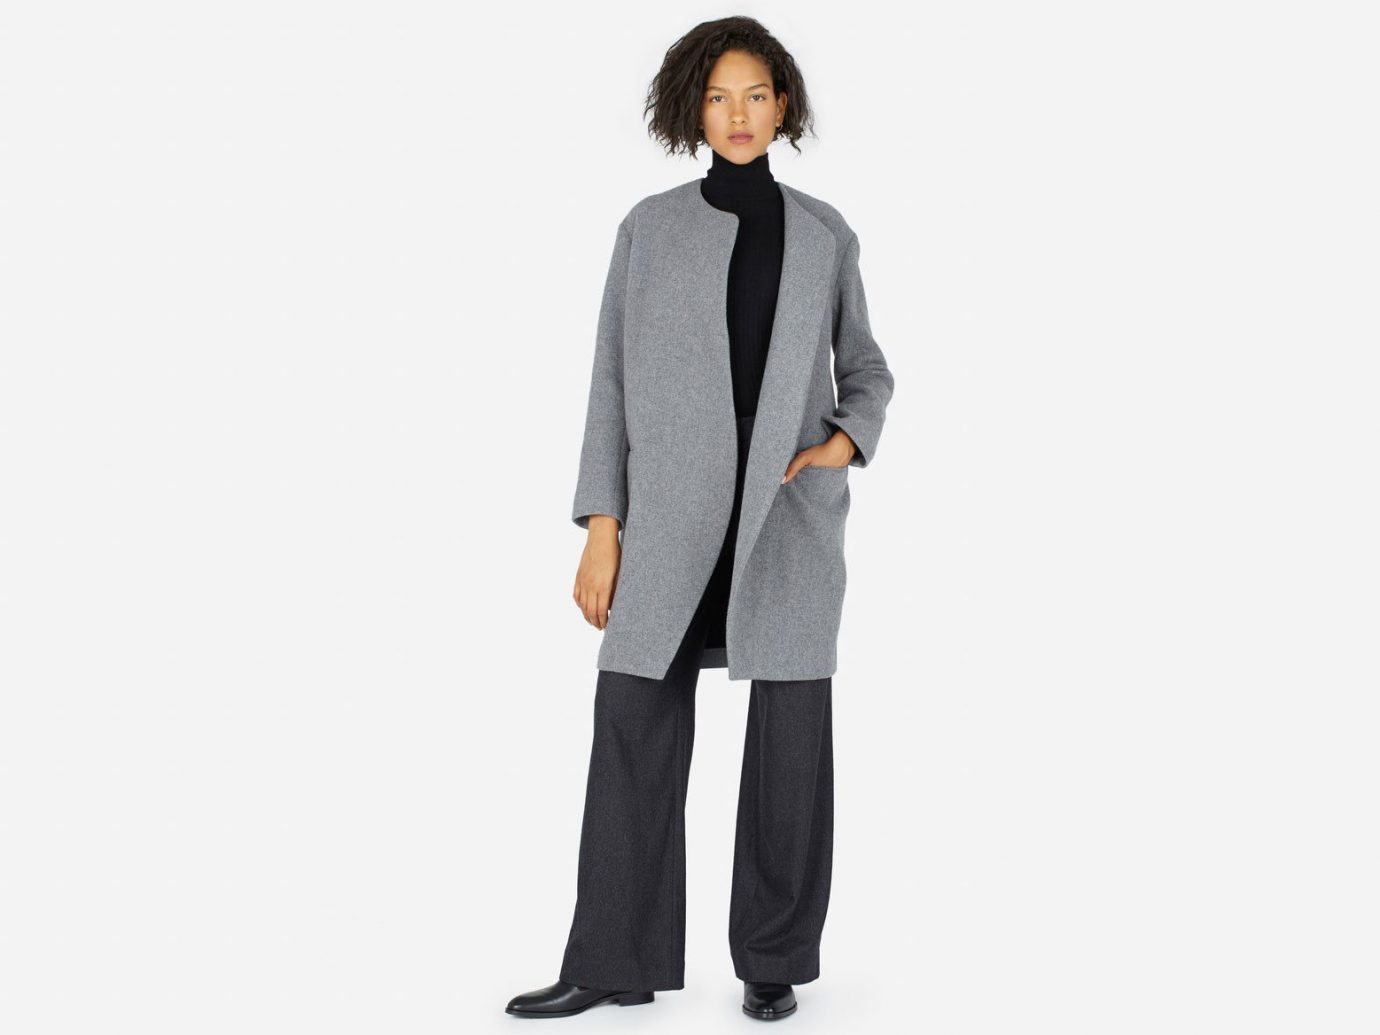 Style + Design clothing suit outerwear overcoat sleeve formal wear coat tuxedo wool jacket collar dressed